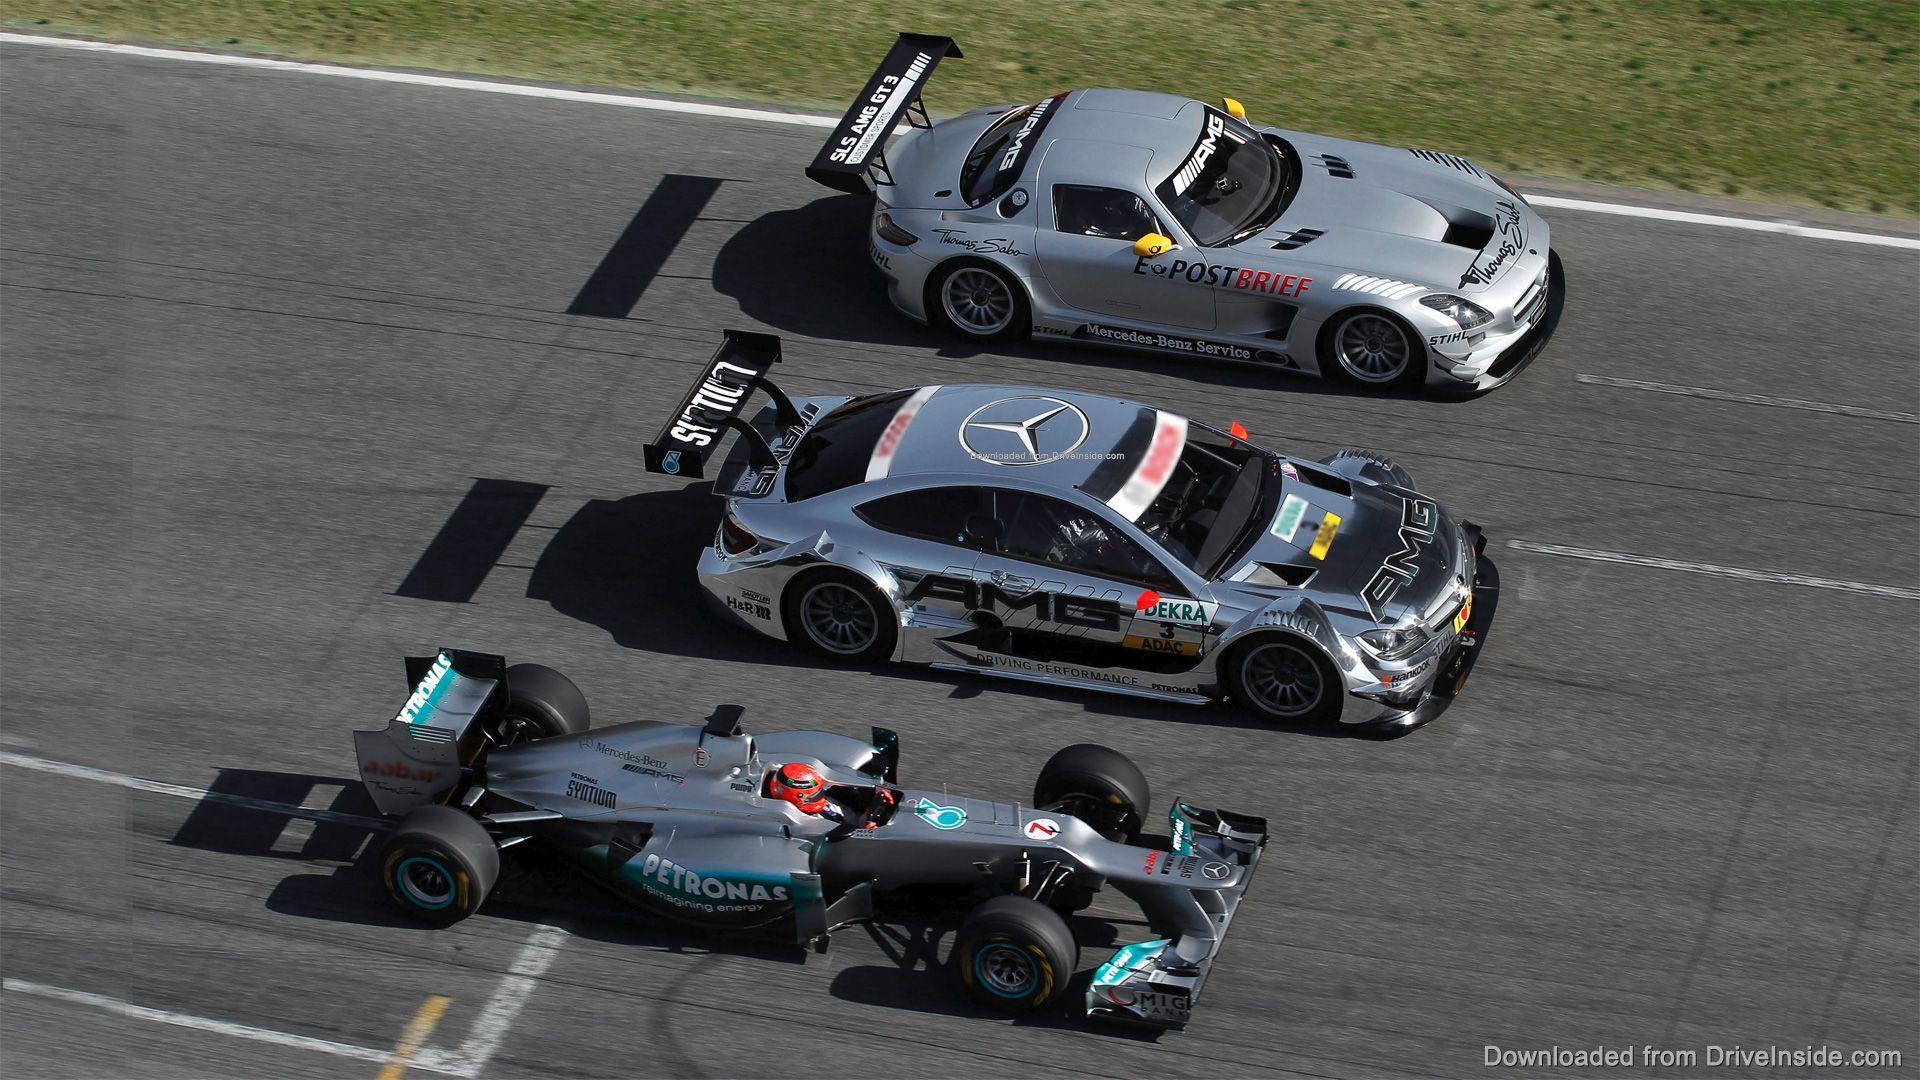 Mercedes AMG Petronas 'keep moving' with Blackberry partnership